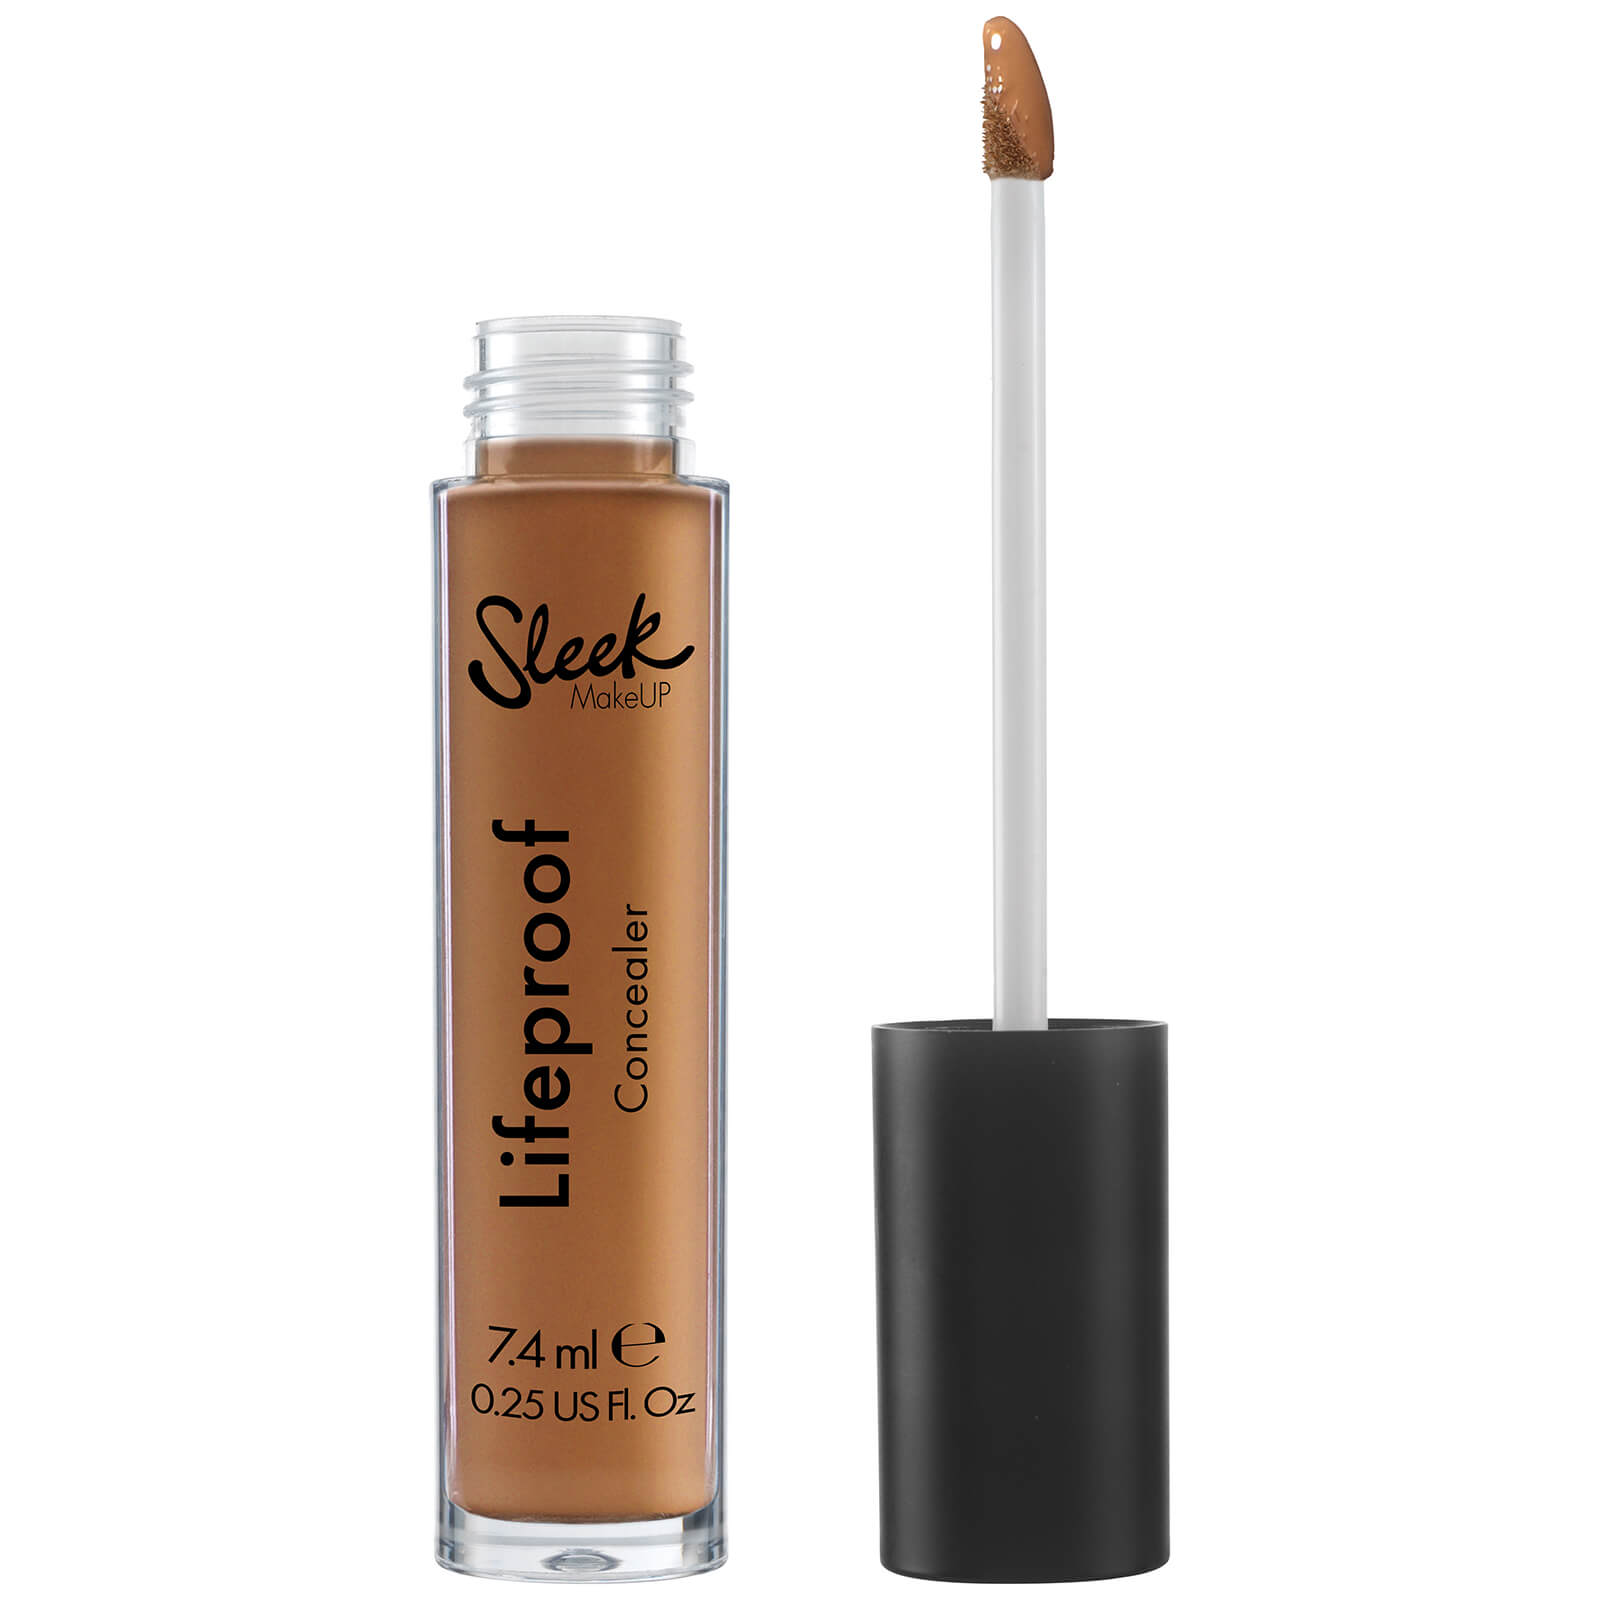 Sleek Makeup Lifeproof Concealer 7.4Ml (Various Shades) - Hazelnut Frappe (08)